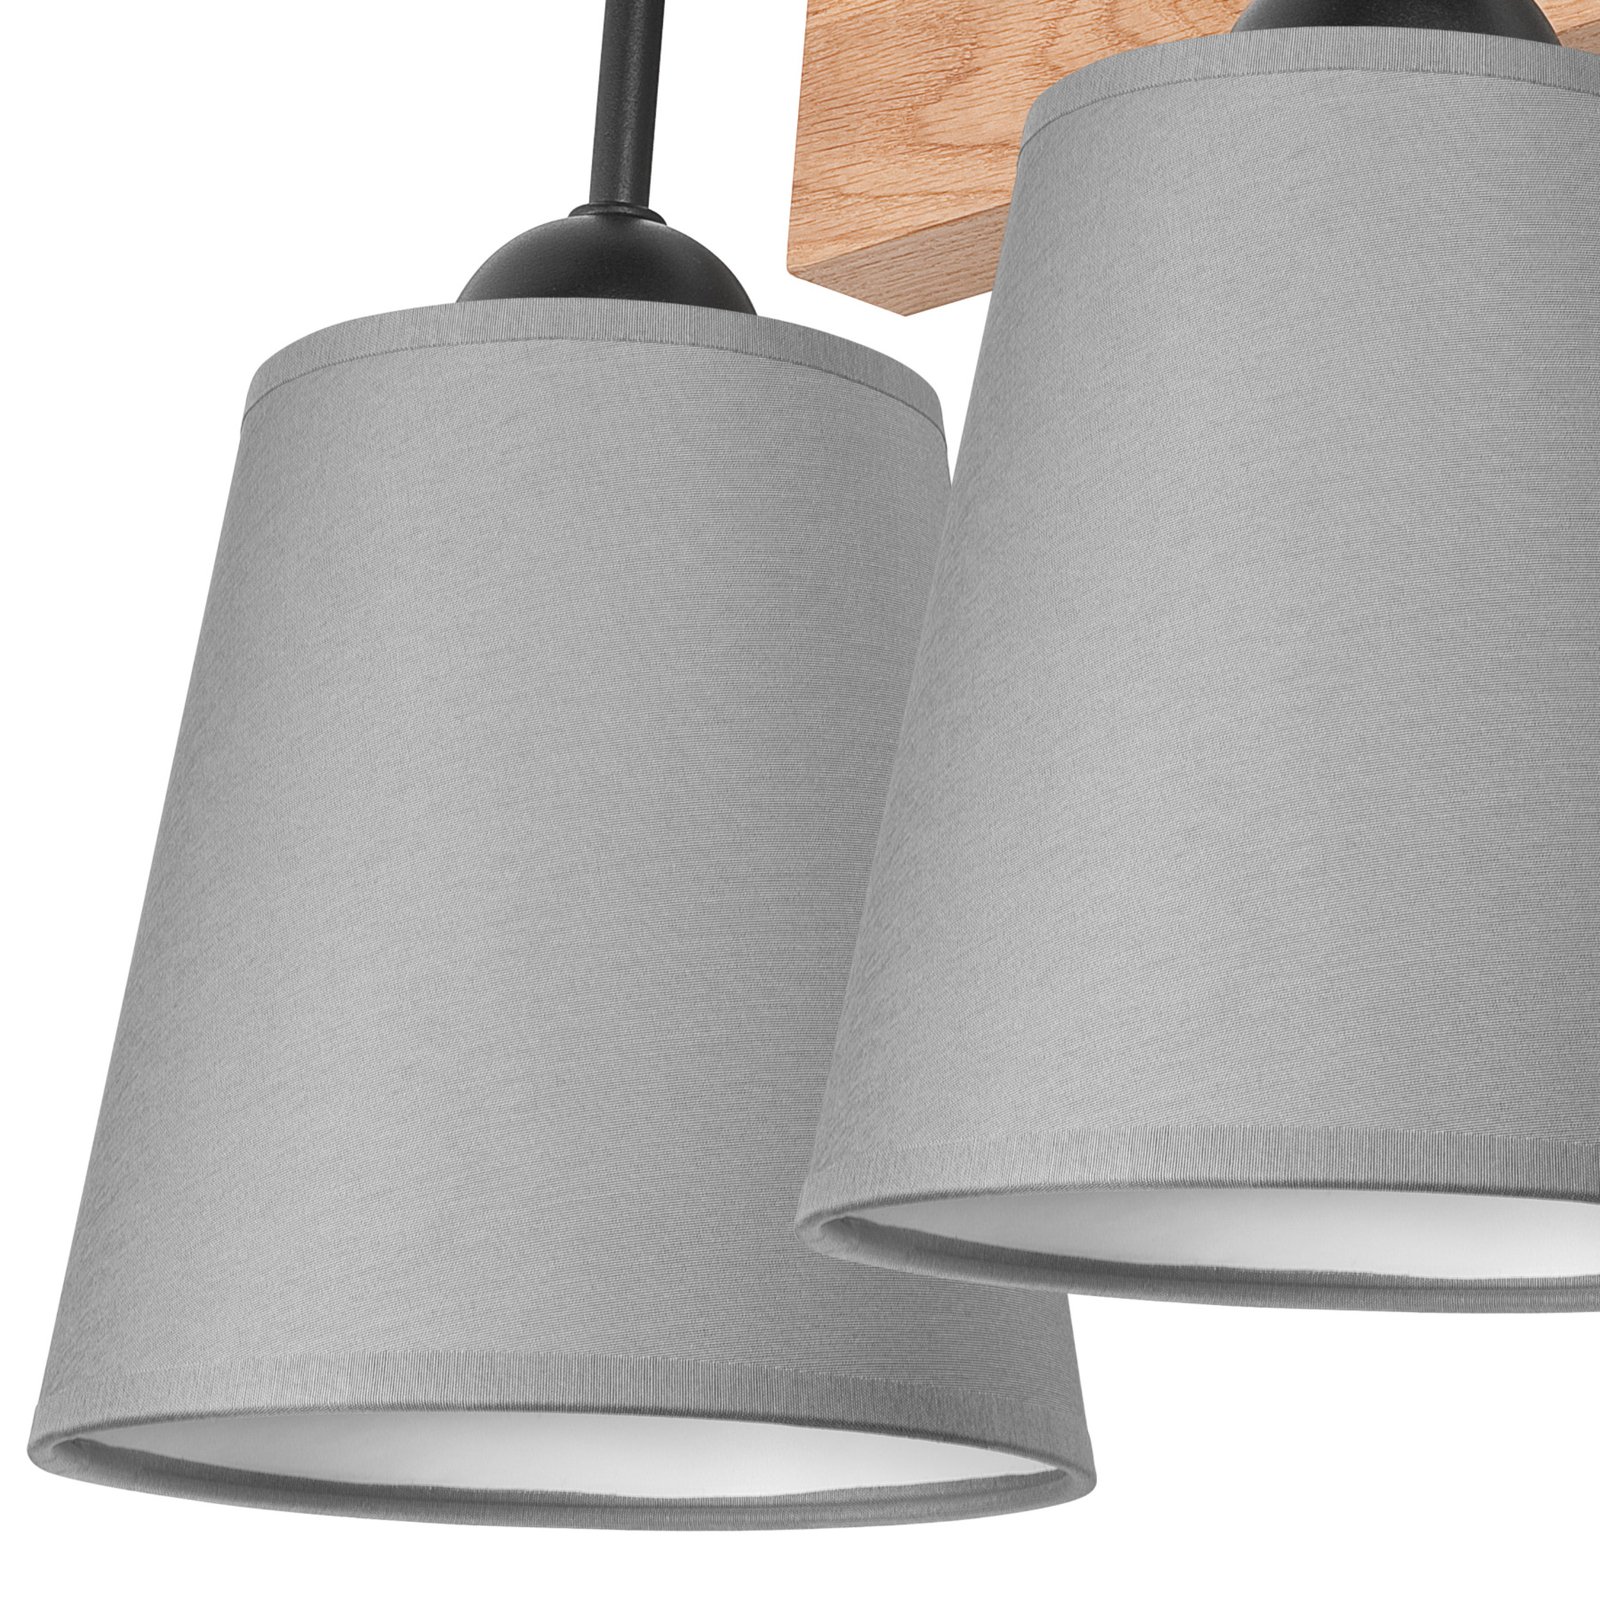 Envostar Risco wall light 2-bulb fabric shade grey